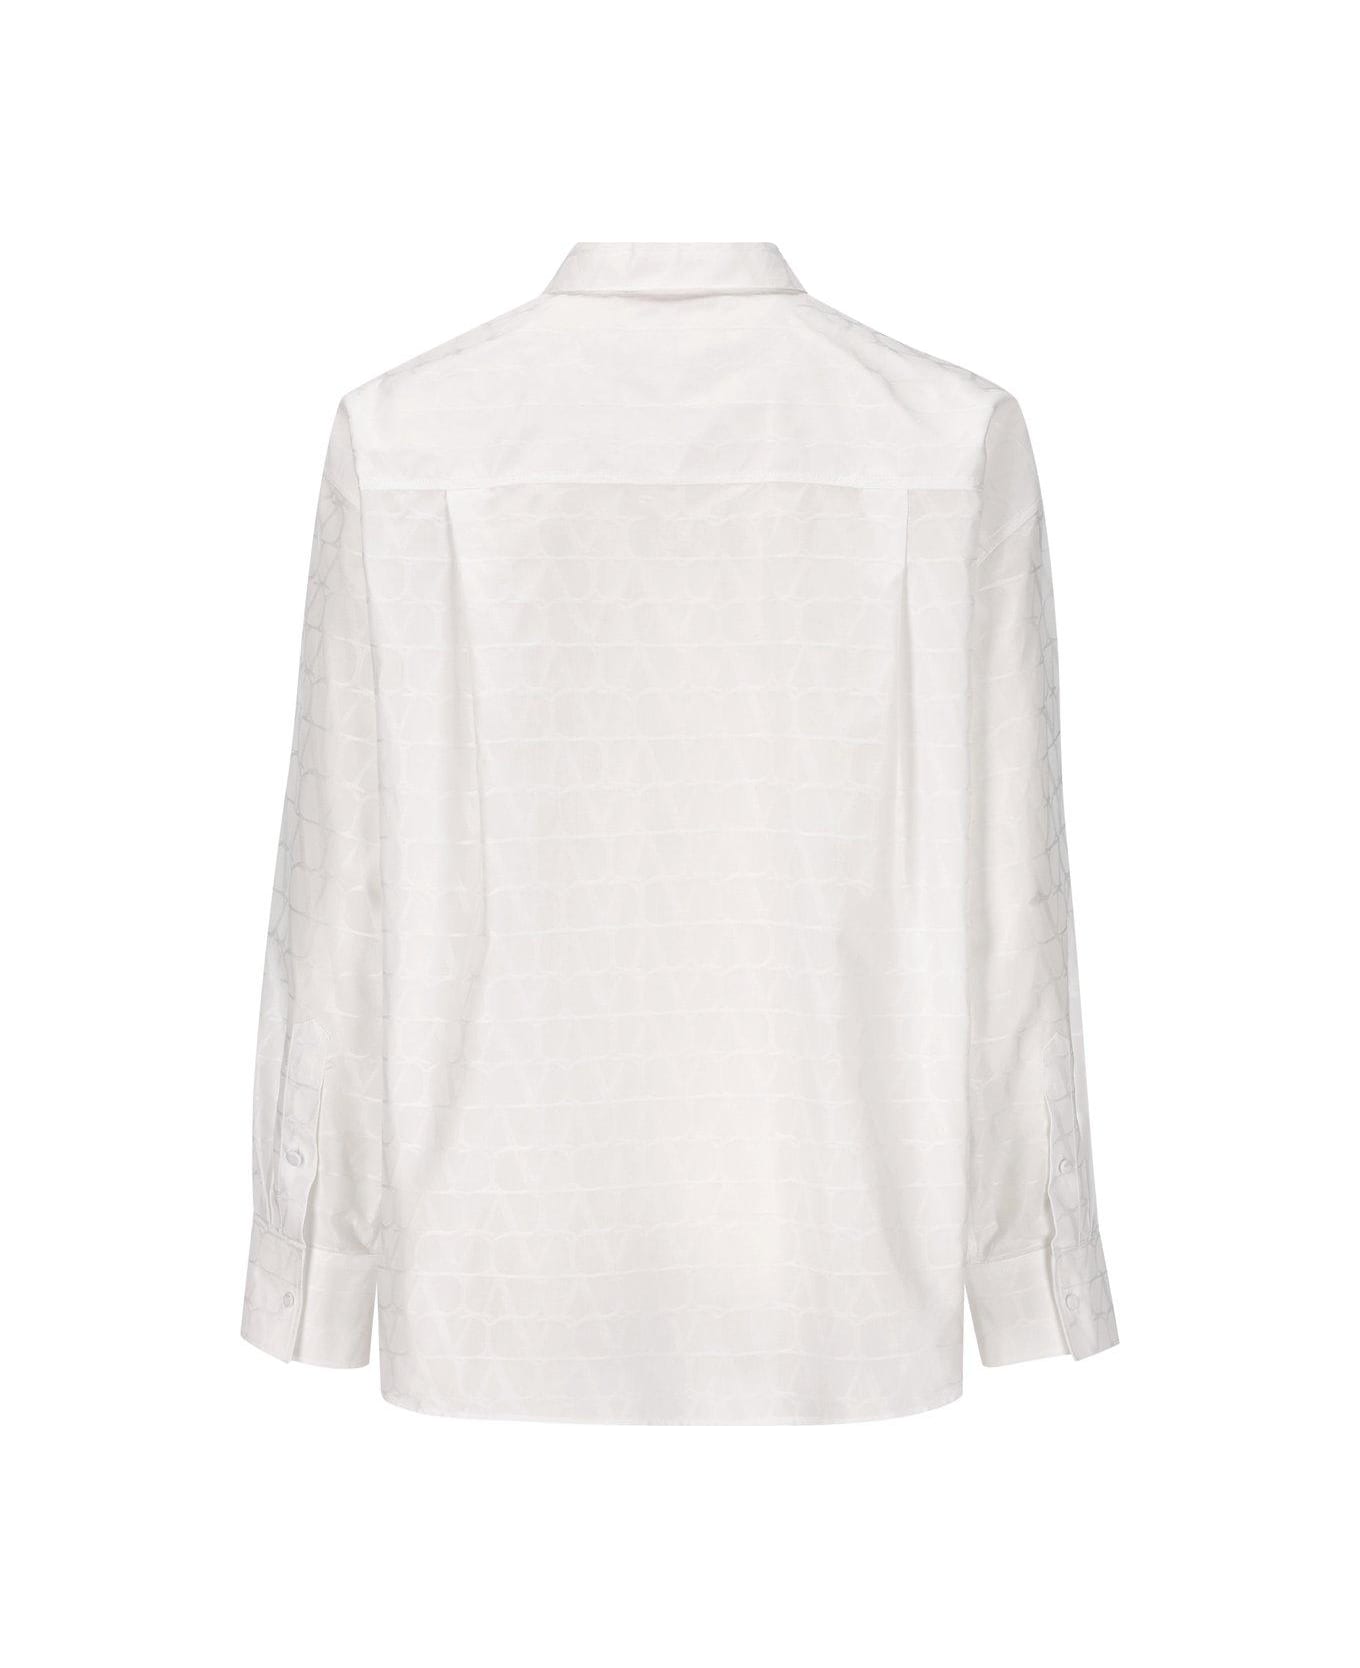 Valentino Toile Iconographe-jacquard Curved Hem Shirt - White